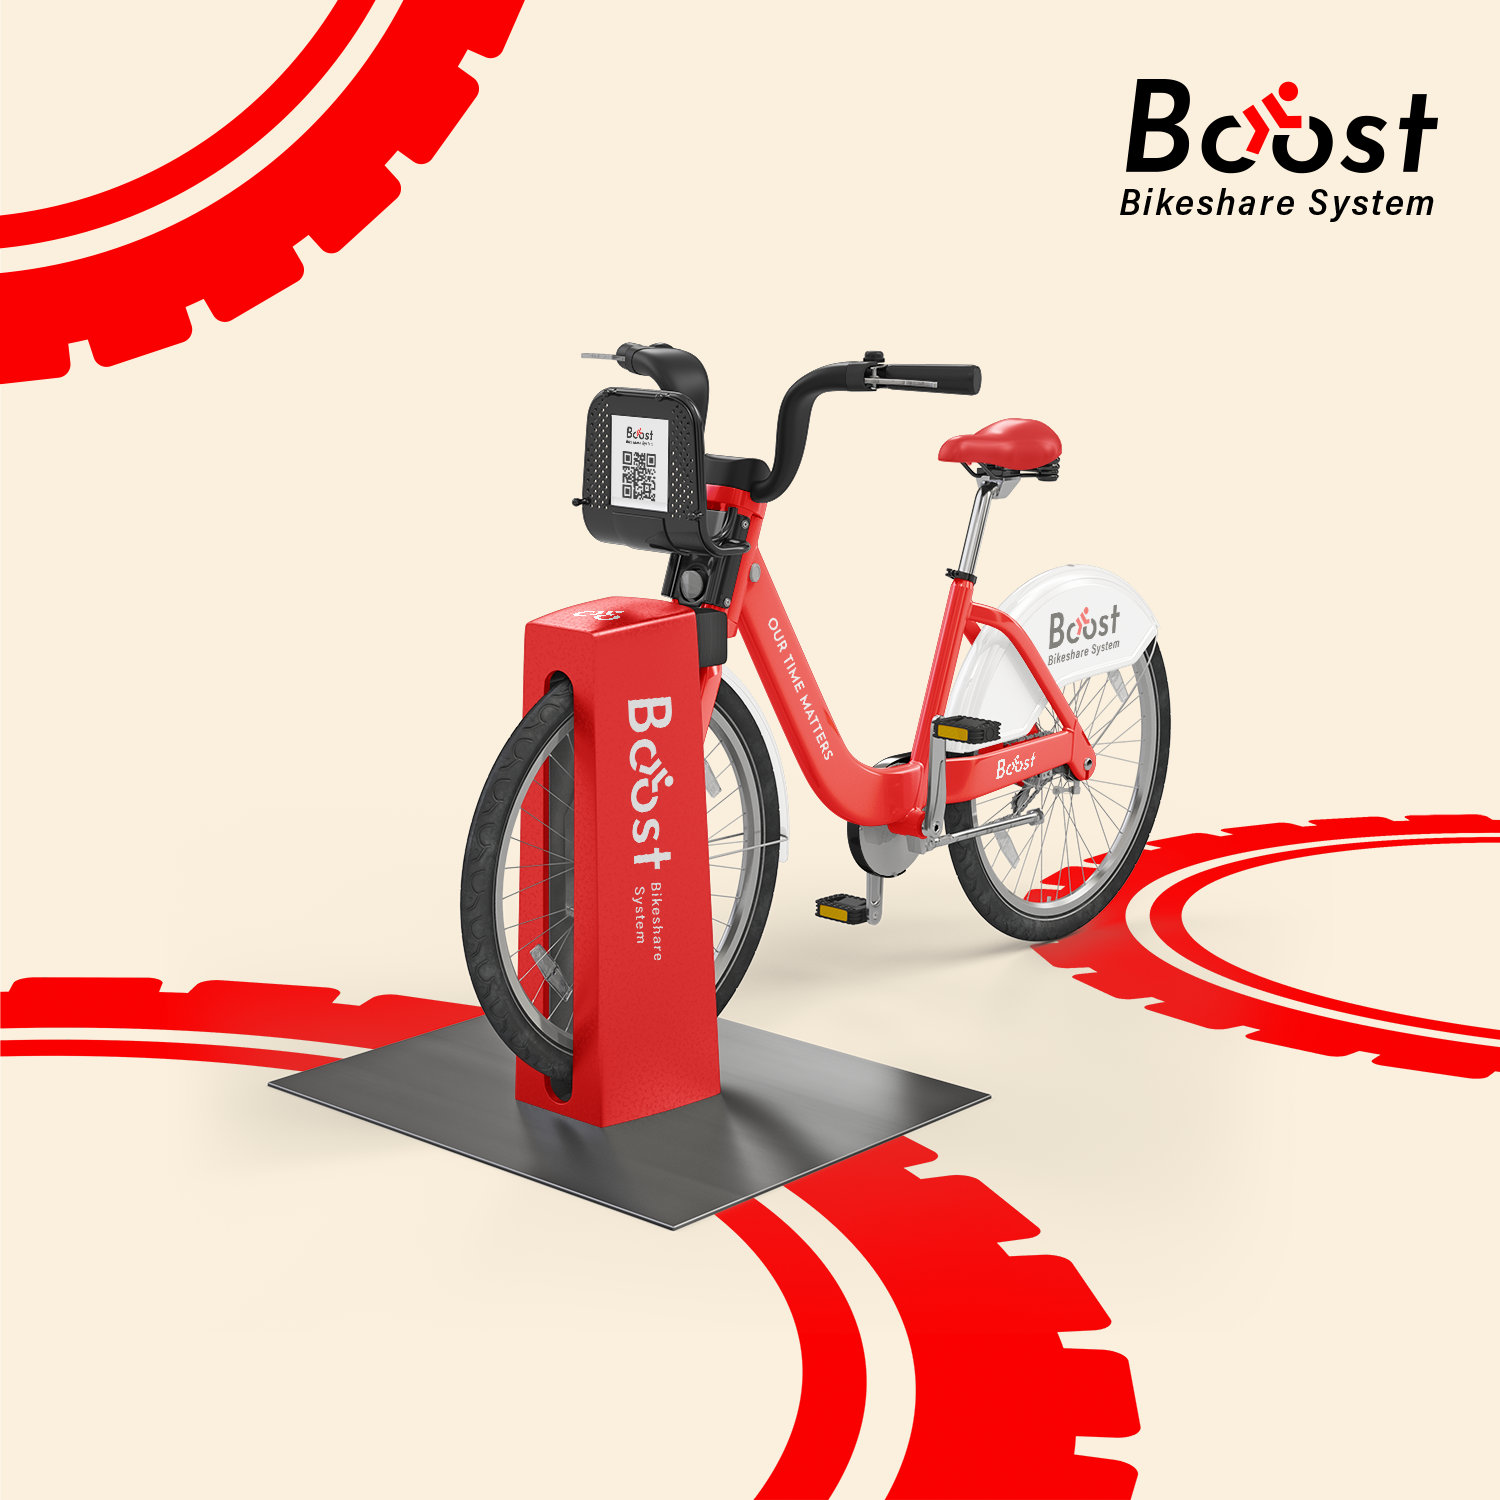 A bike with Boost brand and Boost bike station